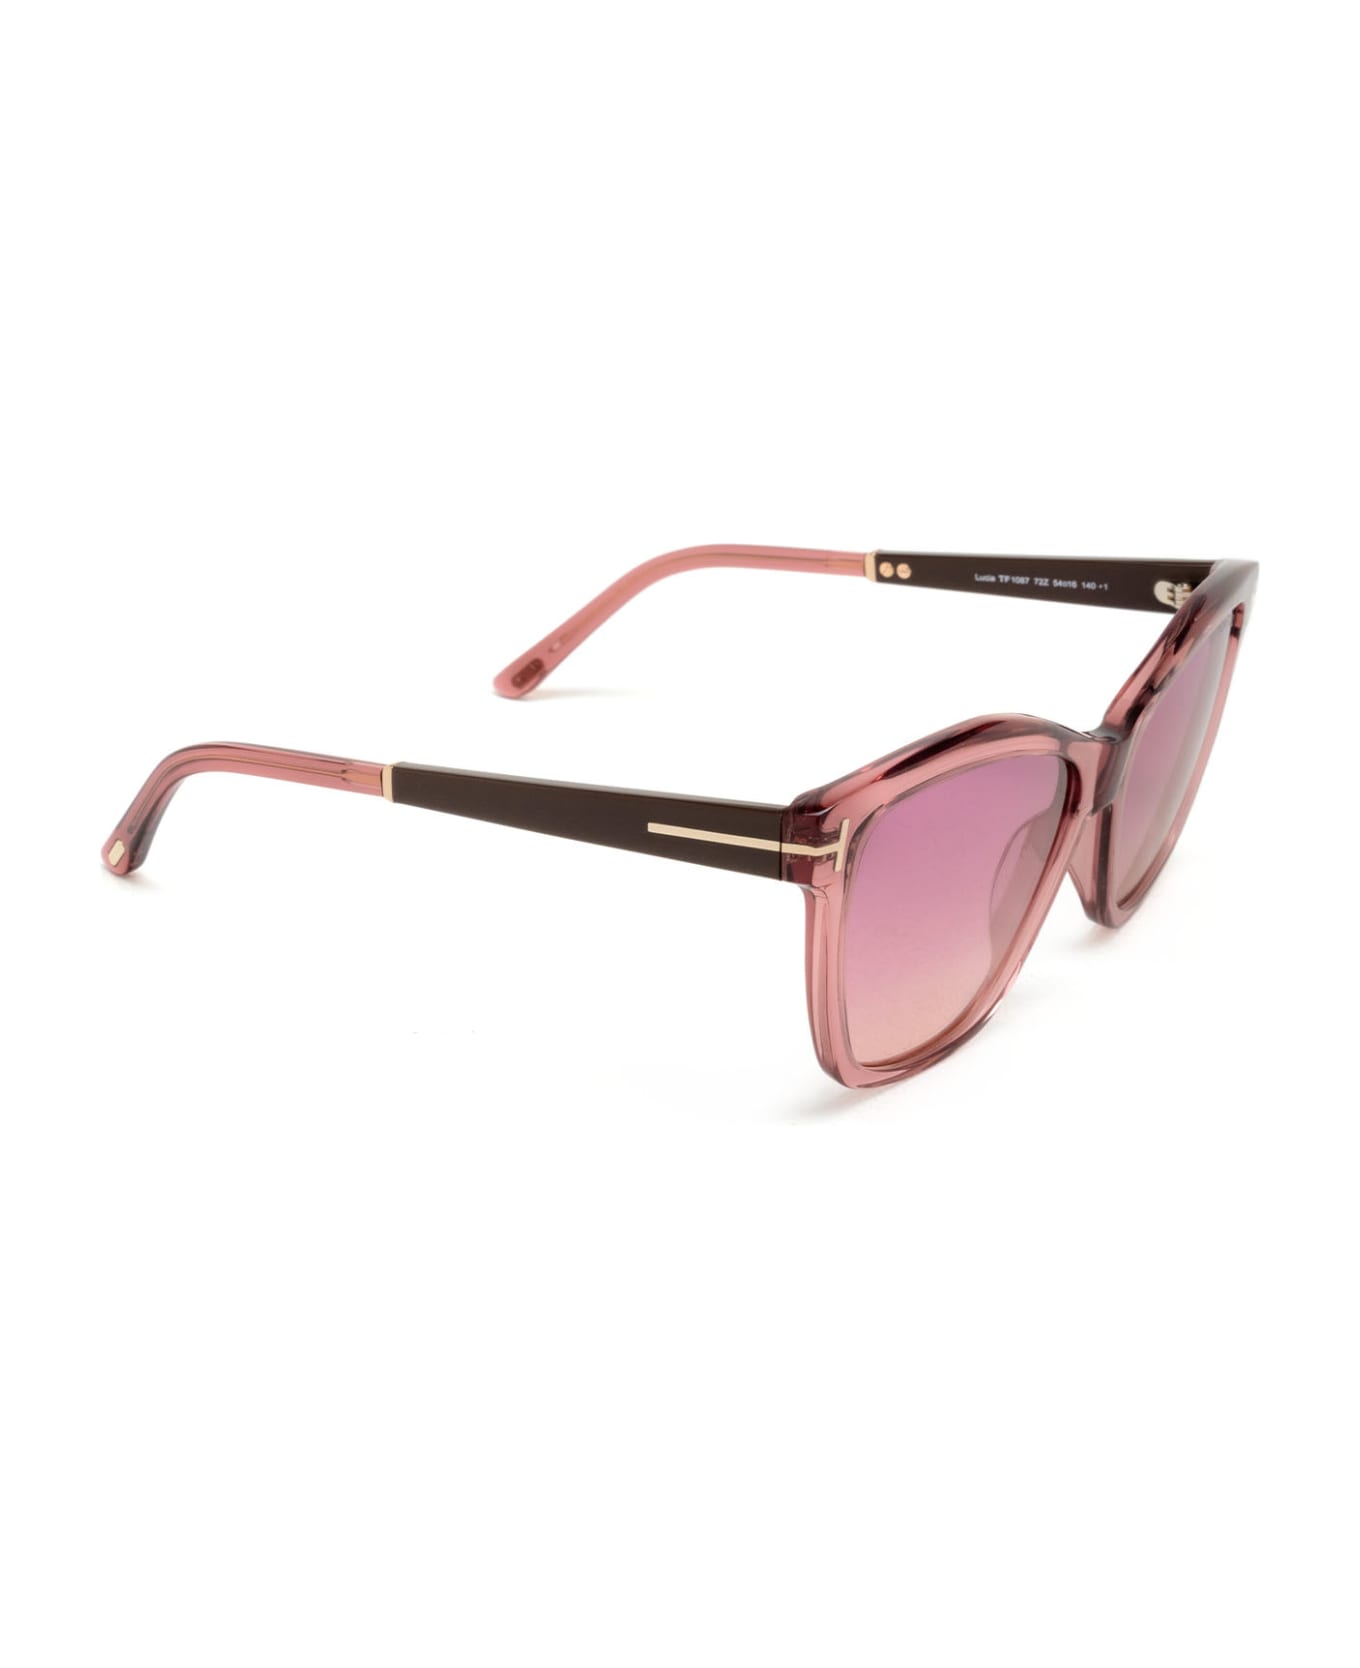 Tom Ford Eyewear Ft1087 Shiny Pink Sunglasses - Shiny Pink